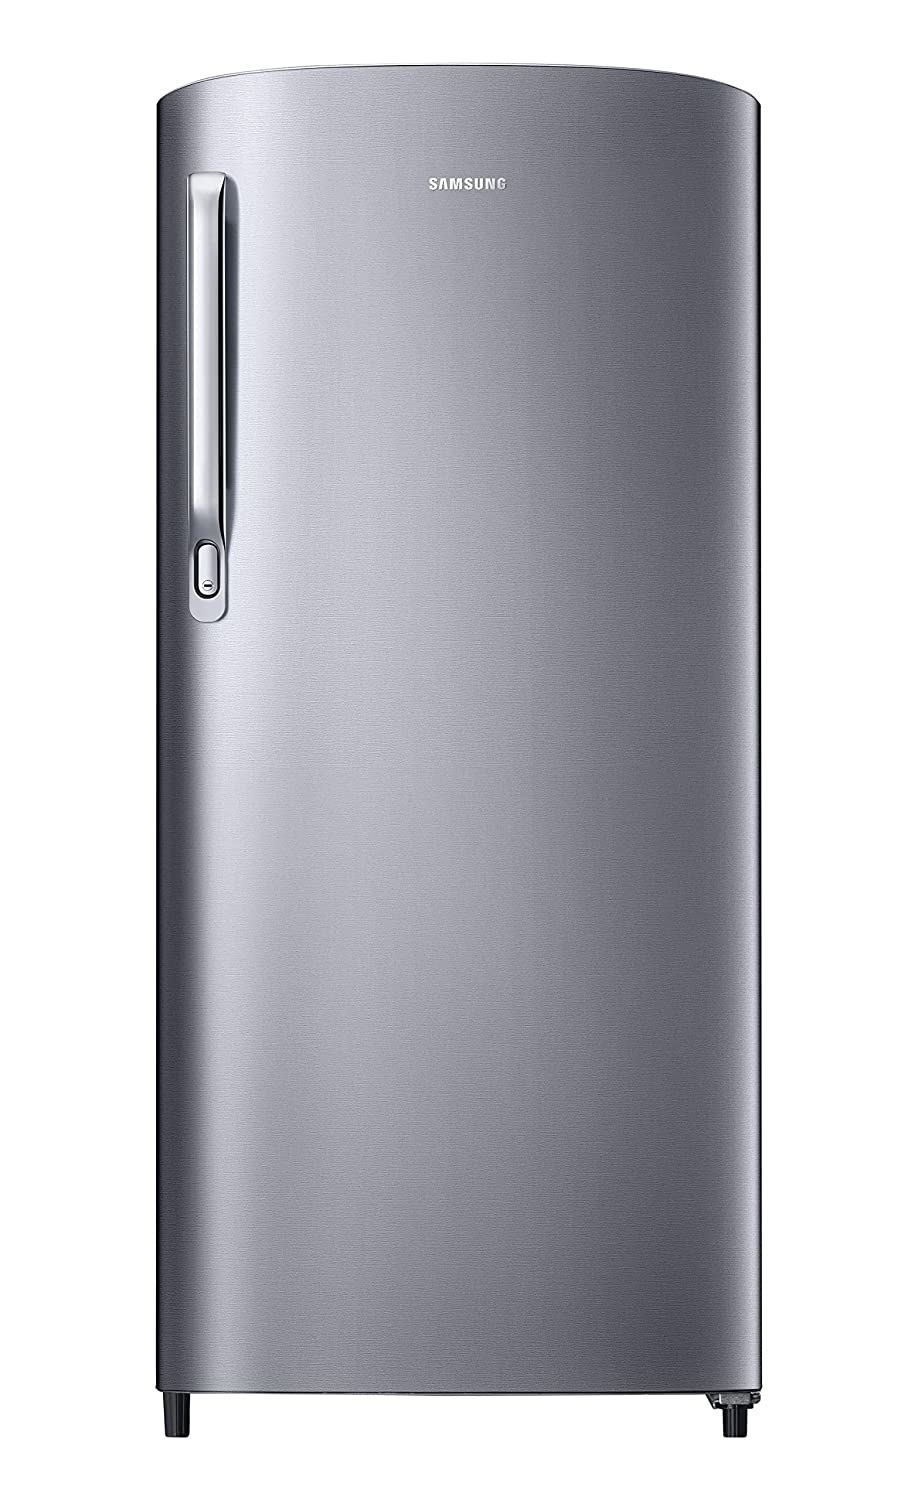 A silver refrigerator